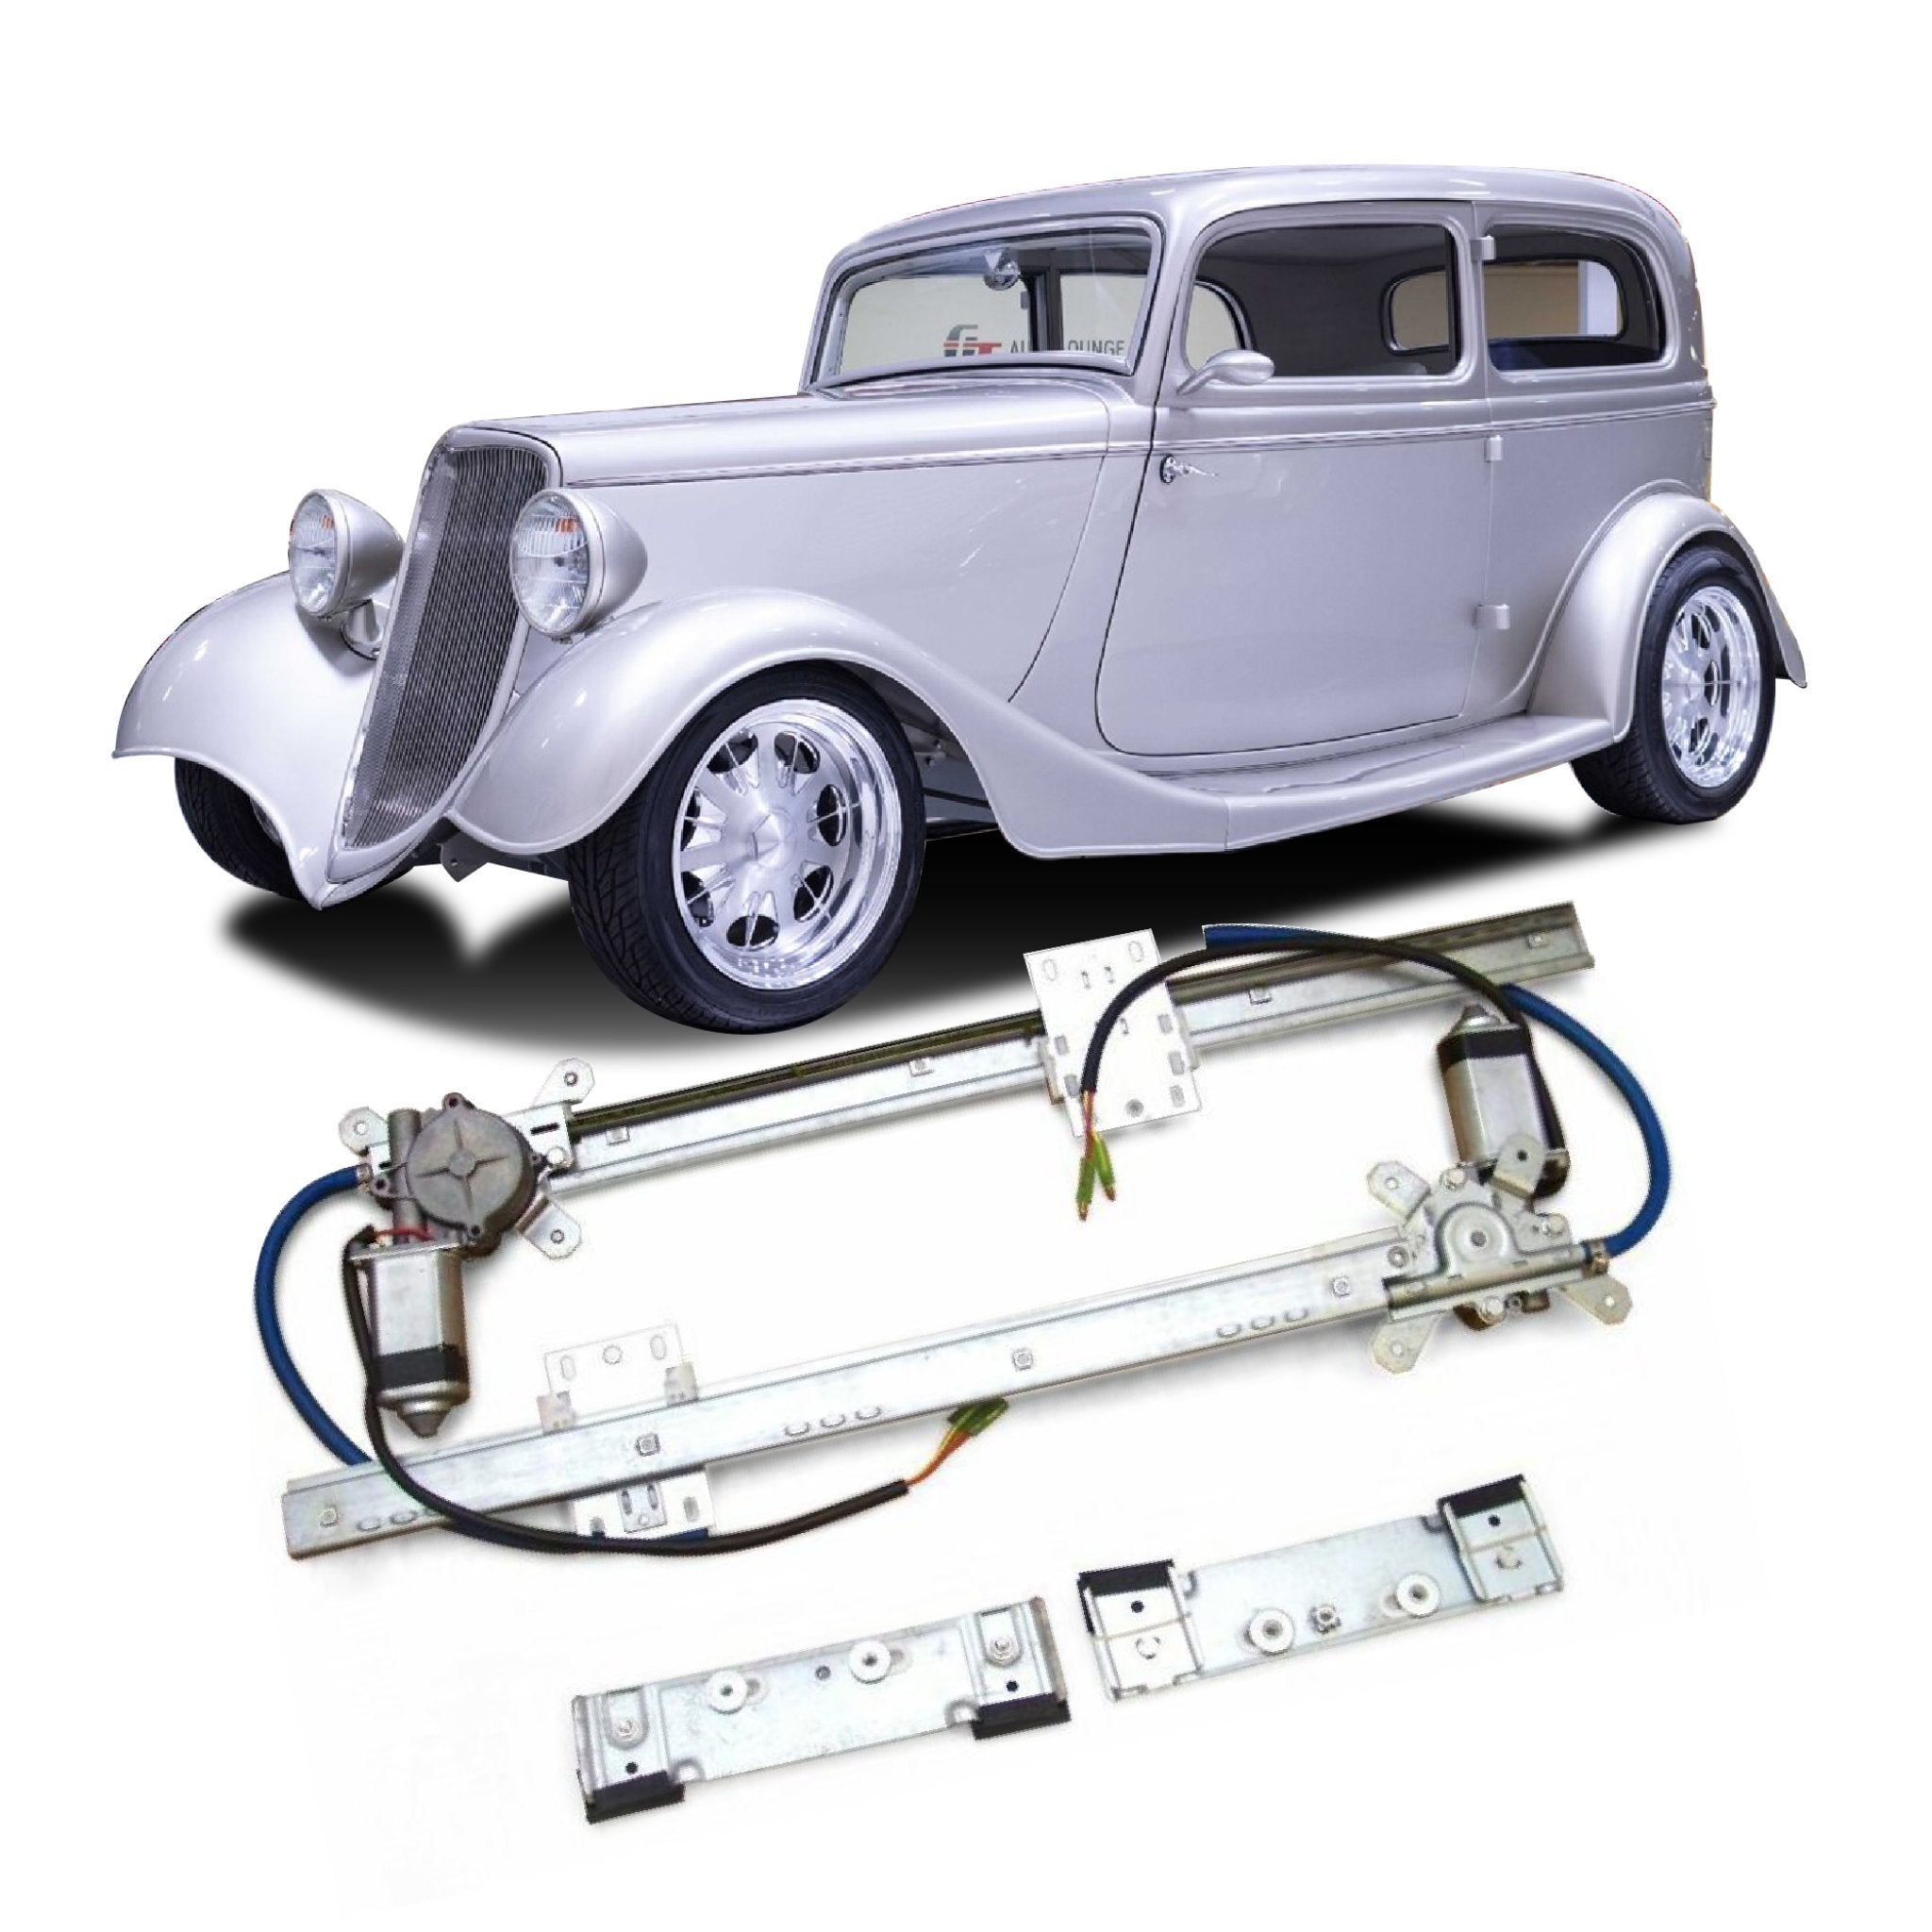 2 Door Power Window Kit for 1933 Model 40 Sedan - Tudor, Delivery, Panel, Woody